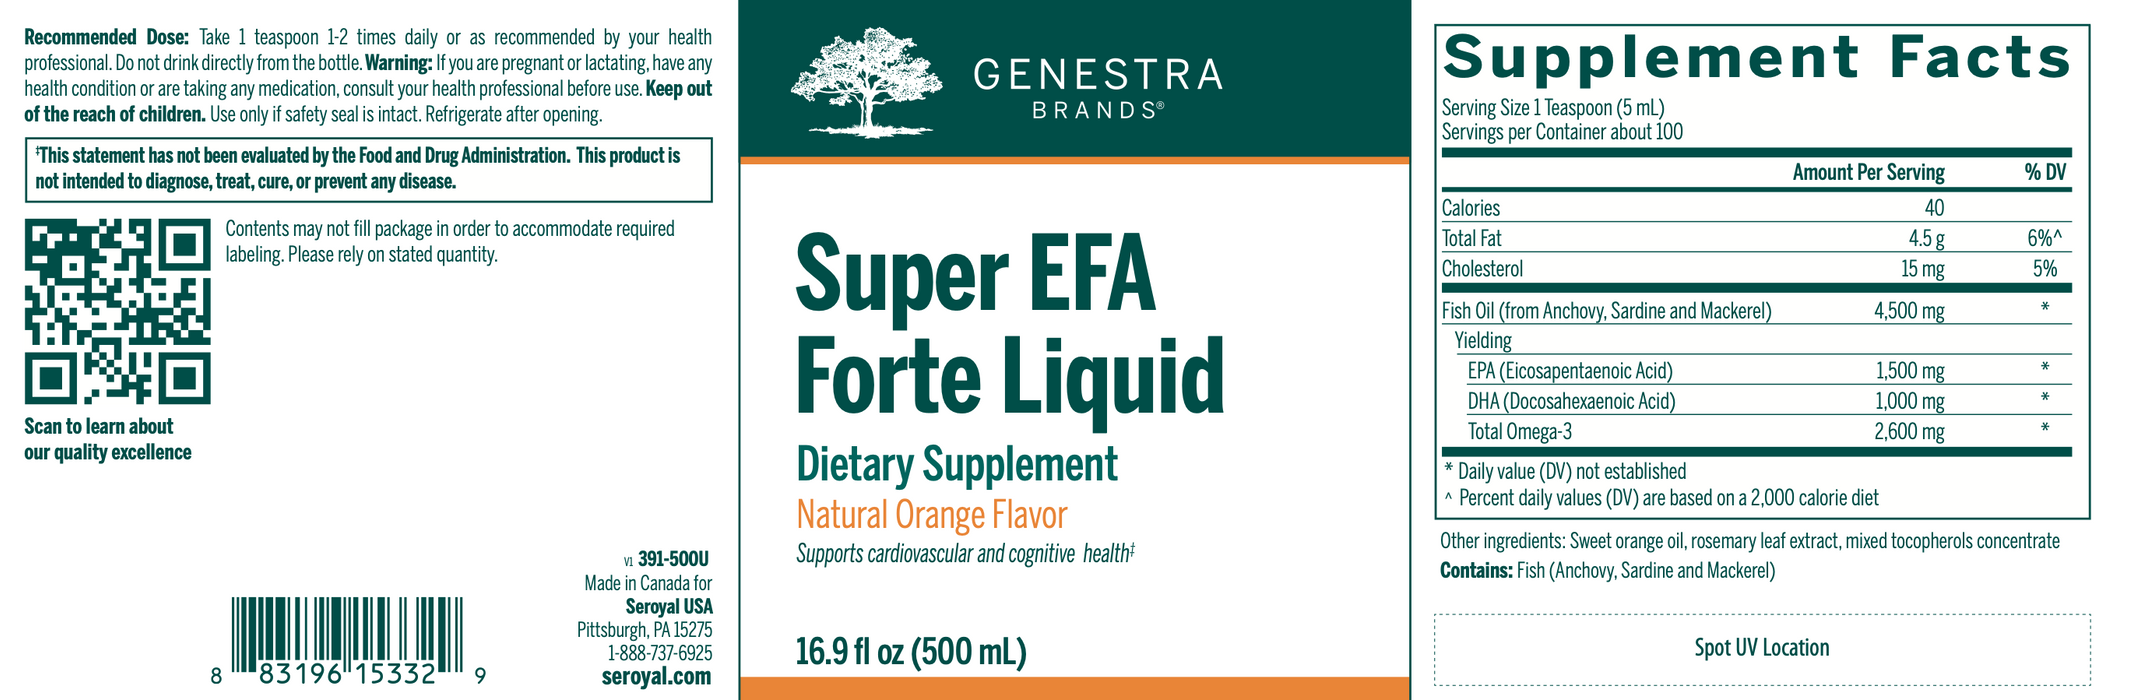 Super EFA Forte Liquid-Genestra-Pine Street Clinic